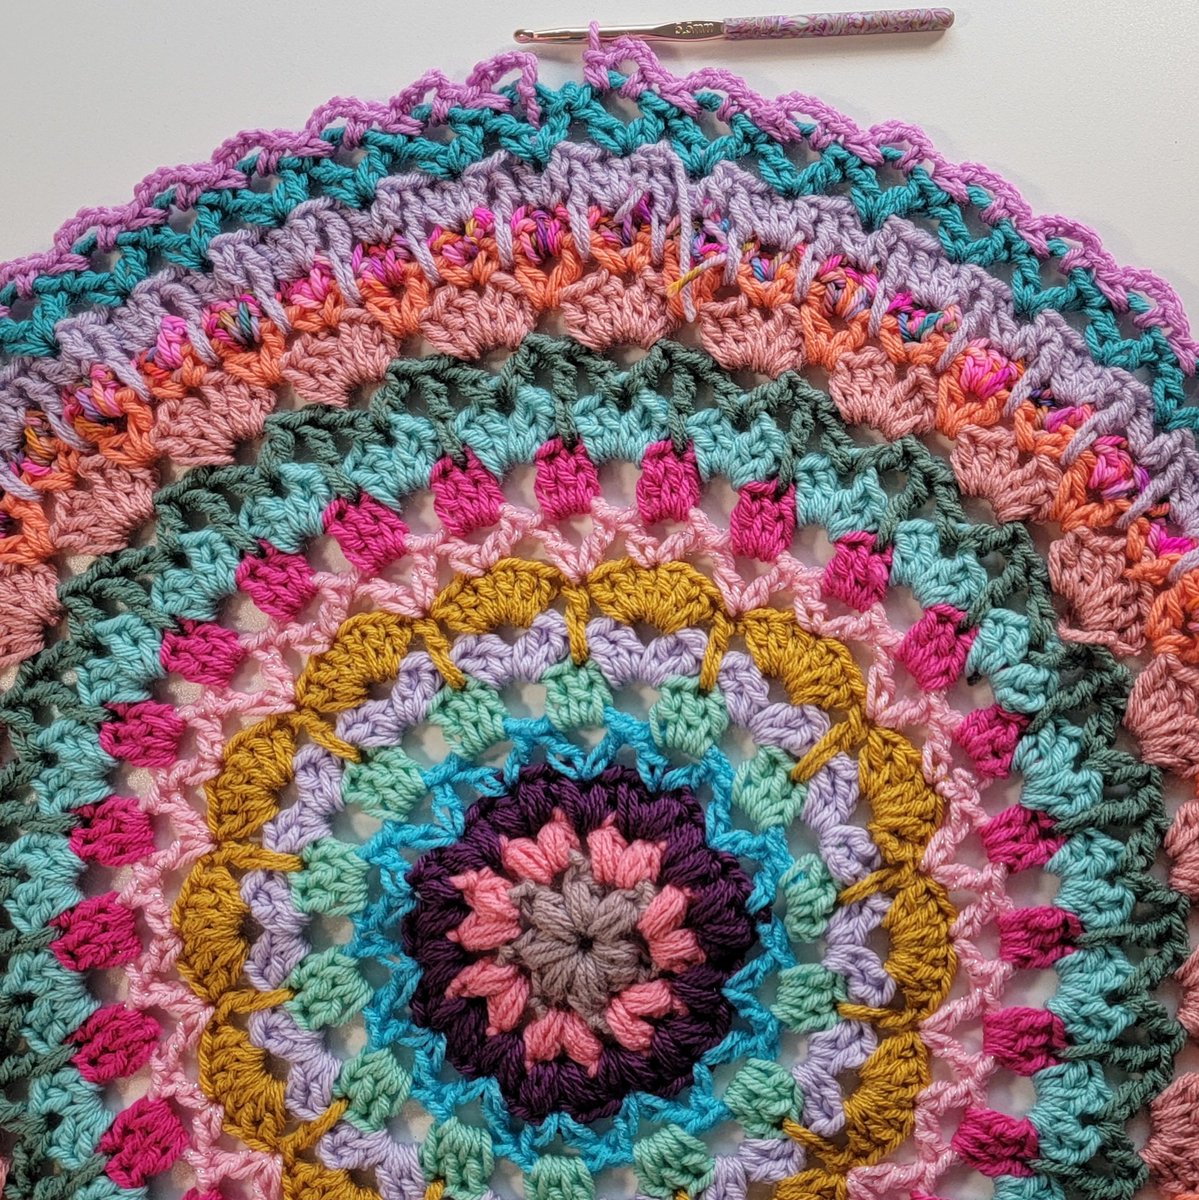 2024 Crochet Mood Blanket! Weeks 17, Row 17! Crafty filled week! 💜✨️👋 #yarn #fiberartist #crocheters #crochet #crocheting #crocheted #crochetersofinstagram #fyptiktok #makers #crochetblanket #crochetcreations #instacrochet #moodblanket #crochetallthethings #crochet365